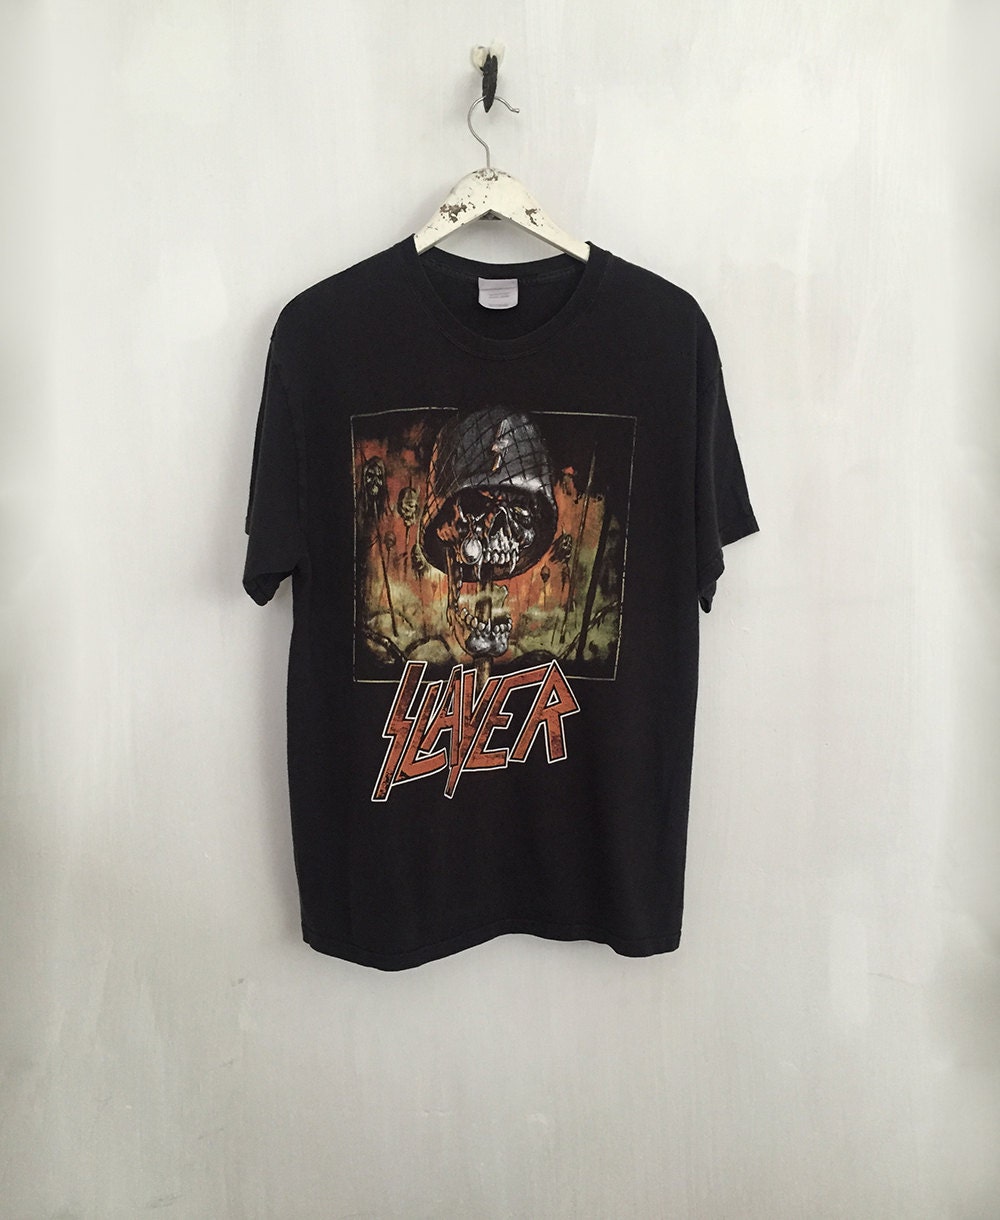 Slayer shirt 90s vintage t shirt band t-shirts rock tshirt